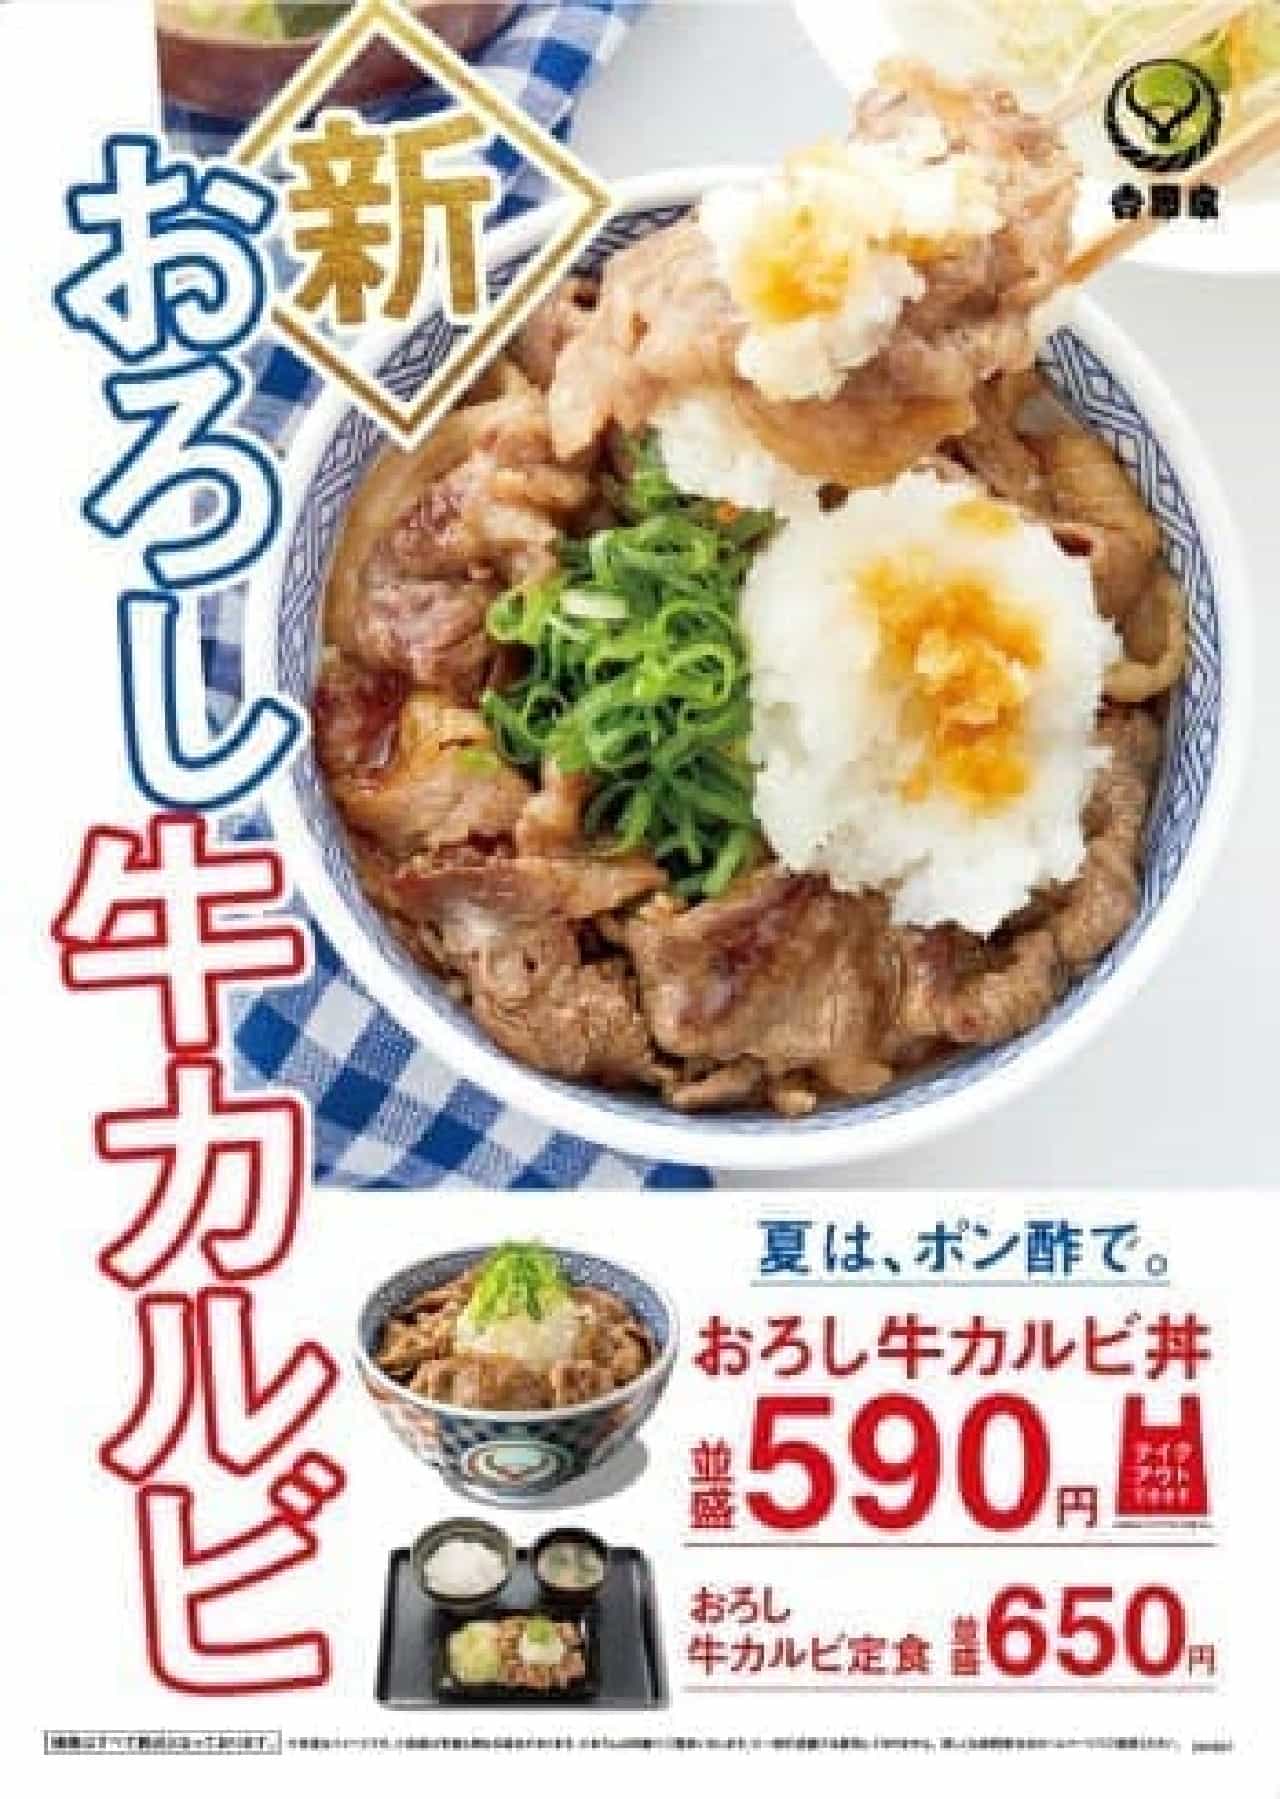 Yoshinoya "Grated beef rib bowl"